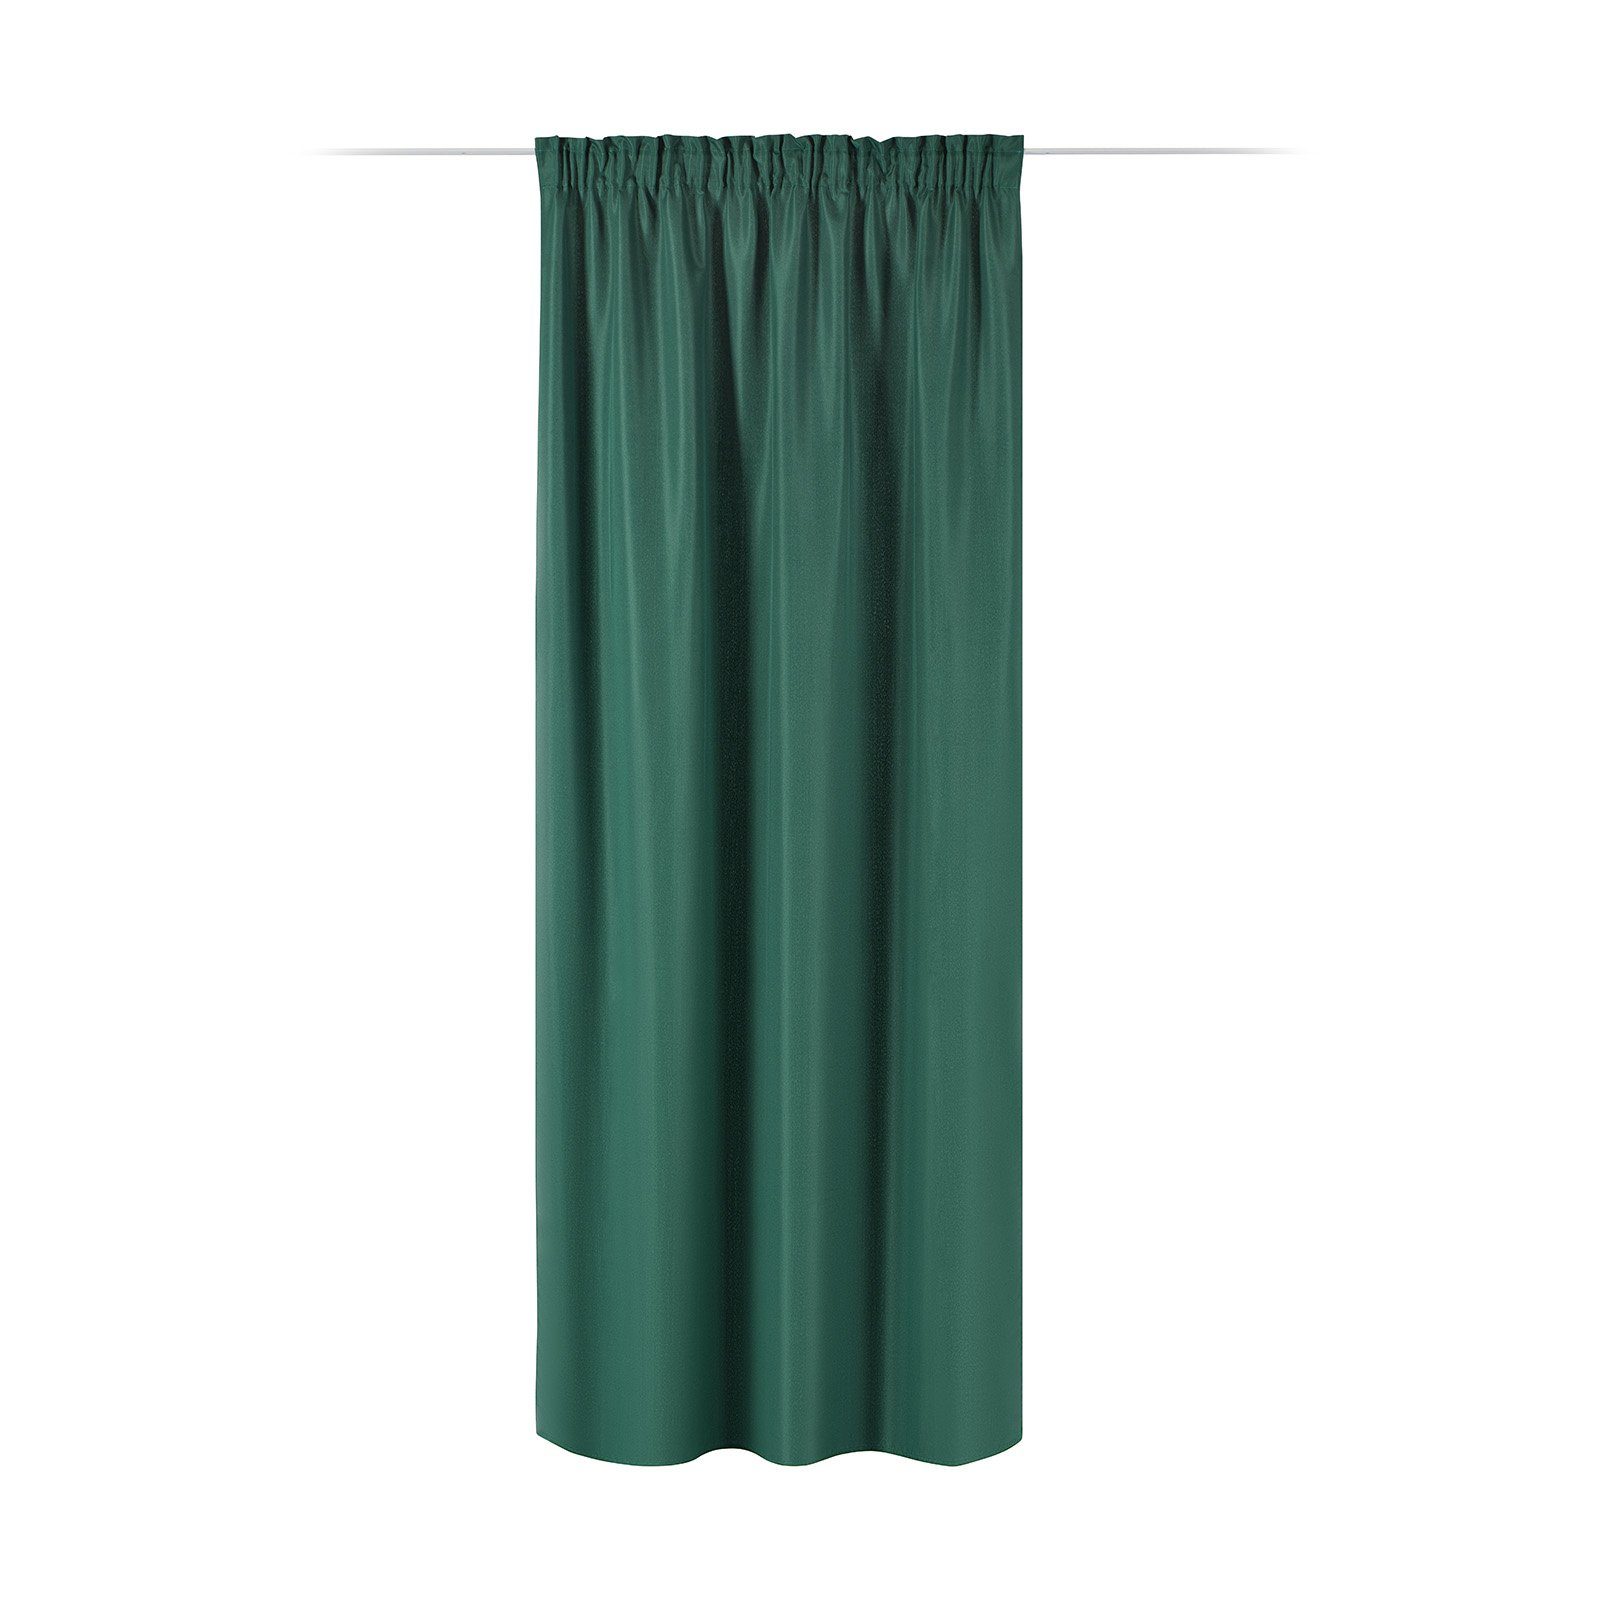 Vorhang Blickdichter Vorhang 140x250cm, Kräuselband, Polyester, grün, JEMIDI, (1 St)